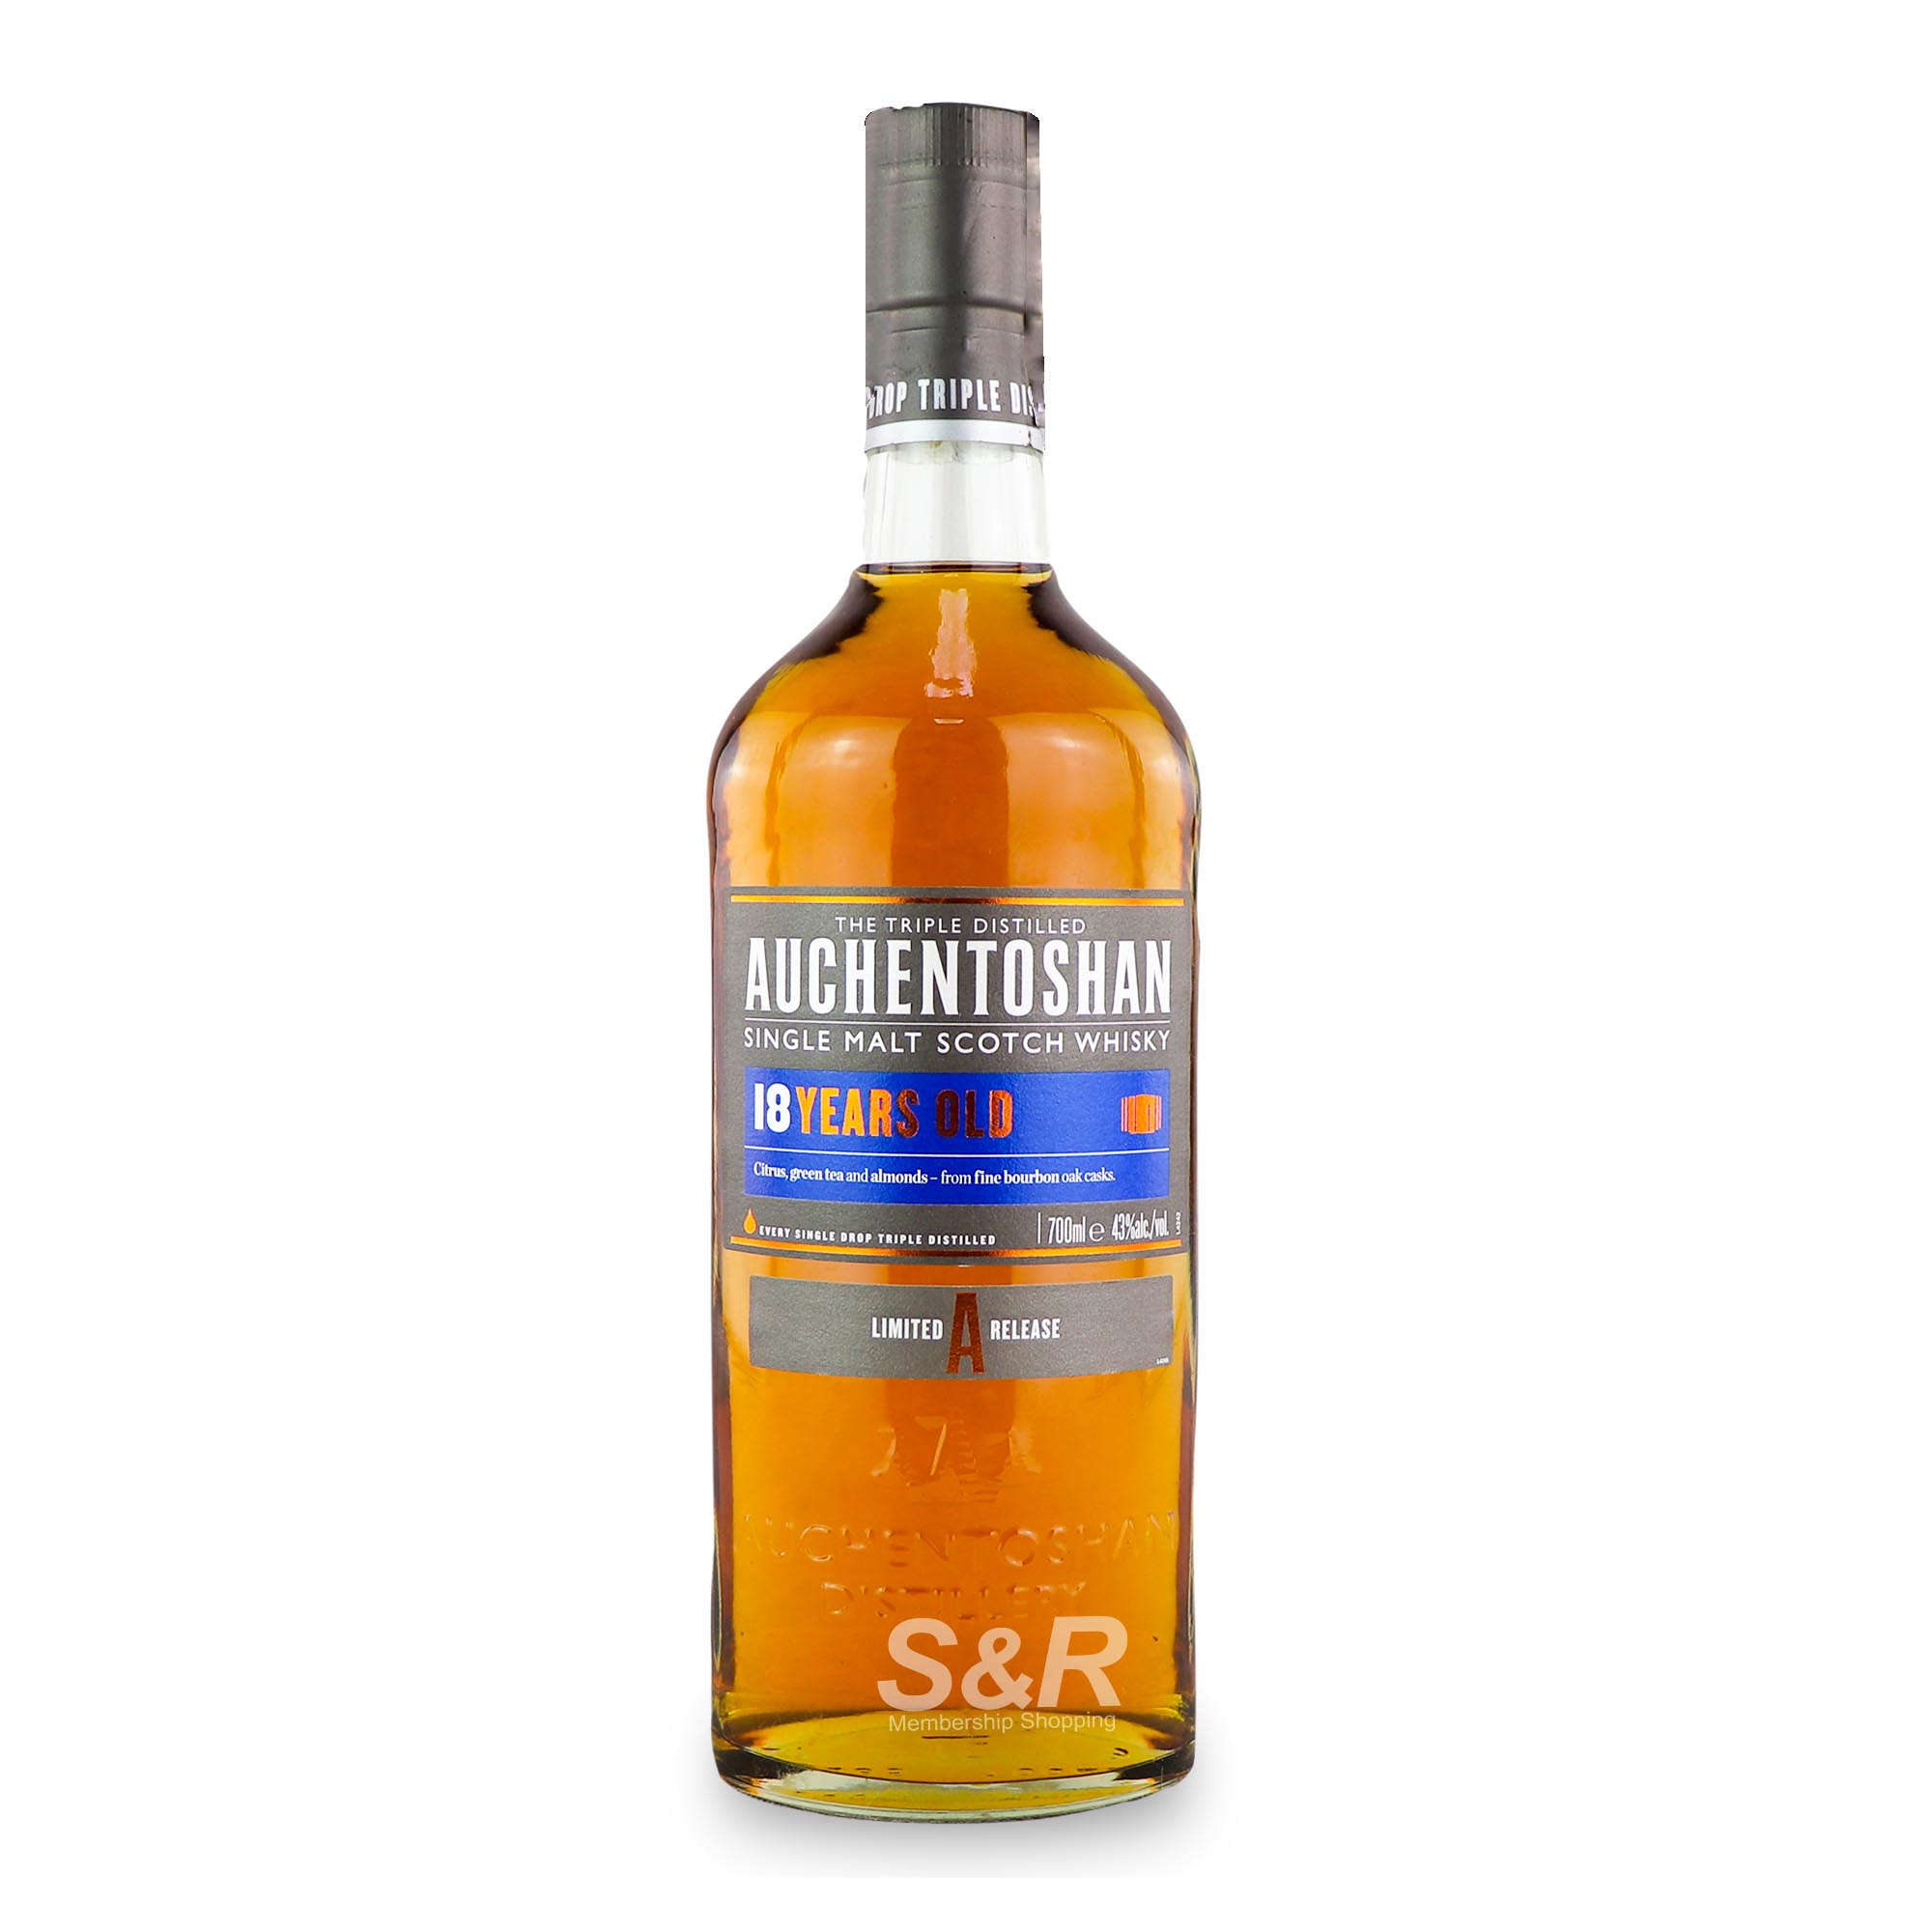 Auchentoshan Aged 18 Years Old Single Malt Scotch Whisky 700mL